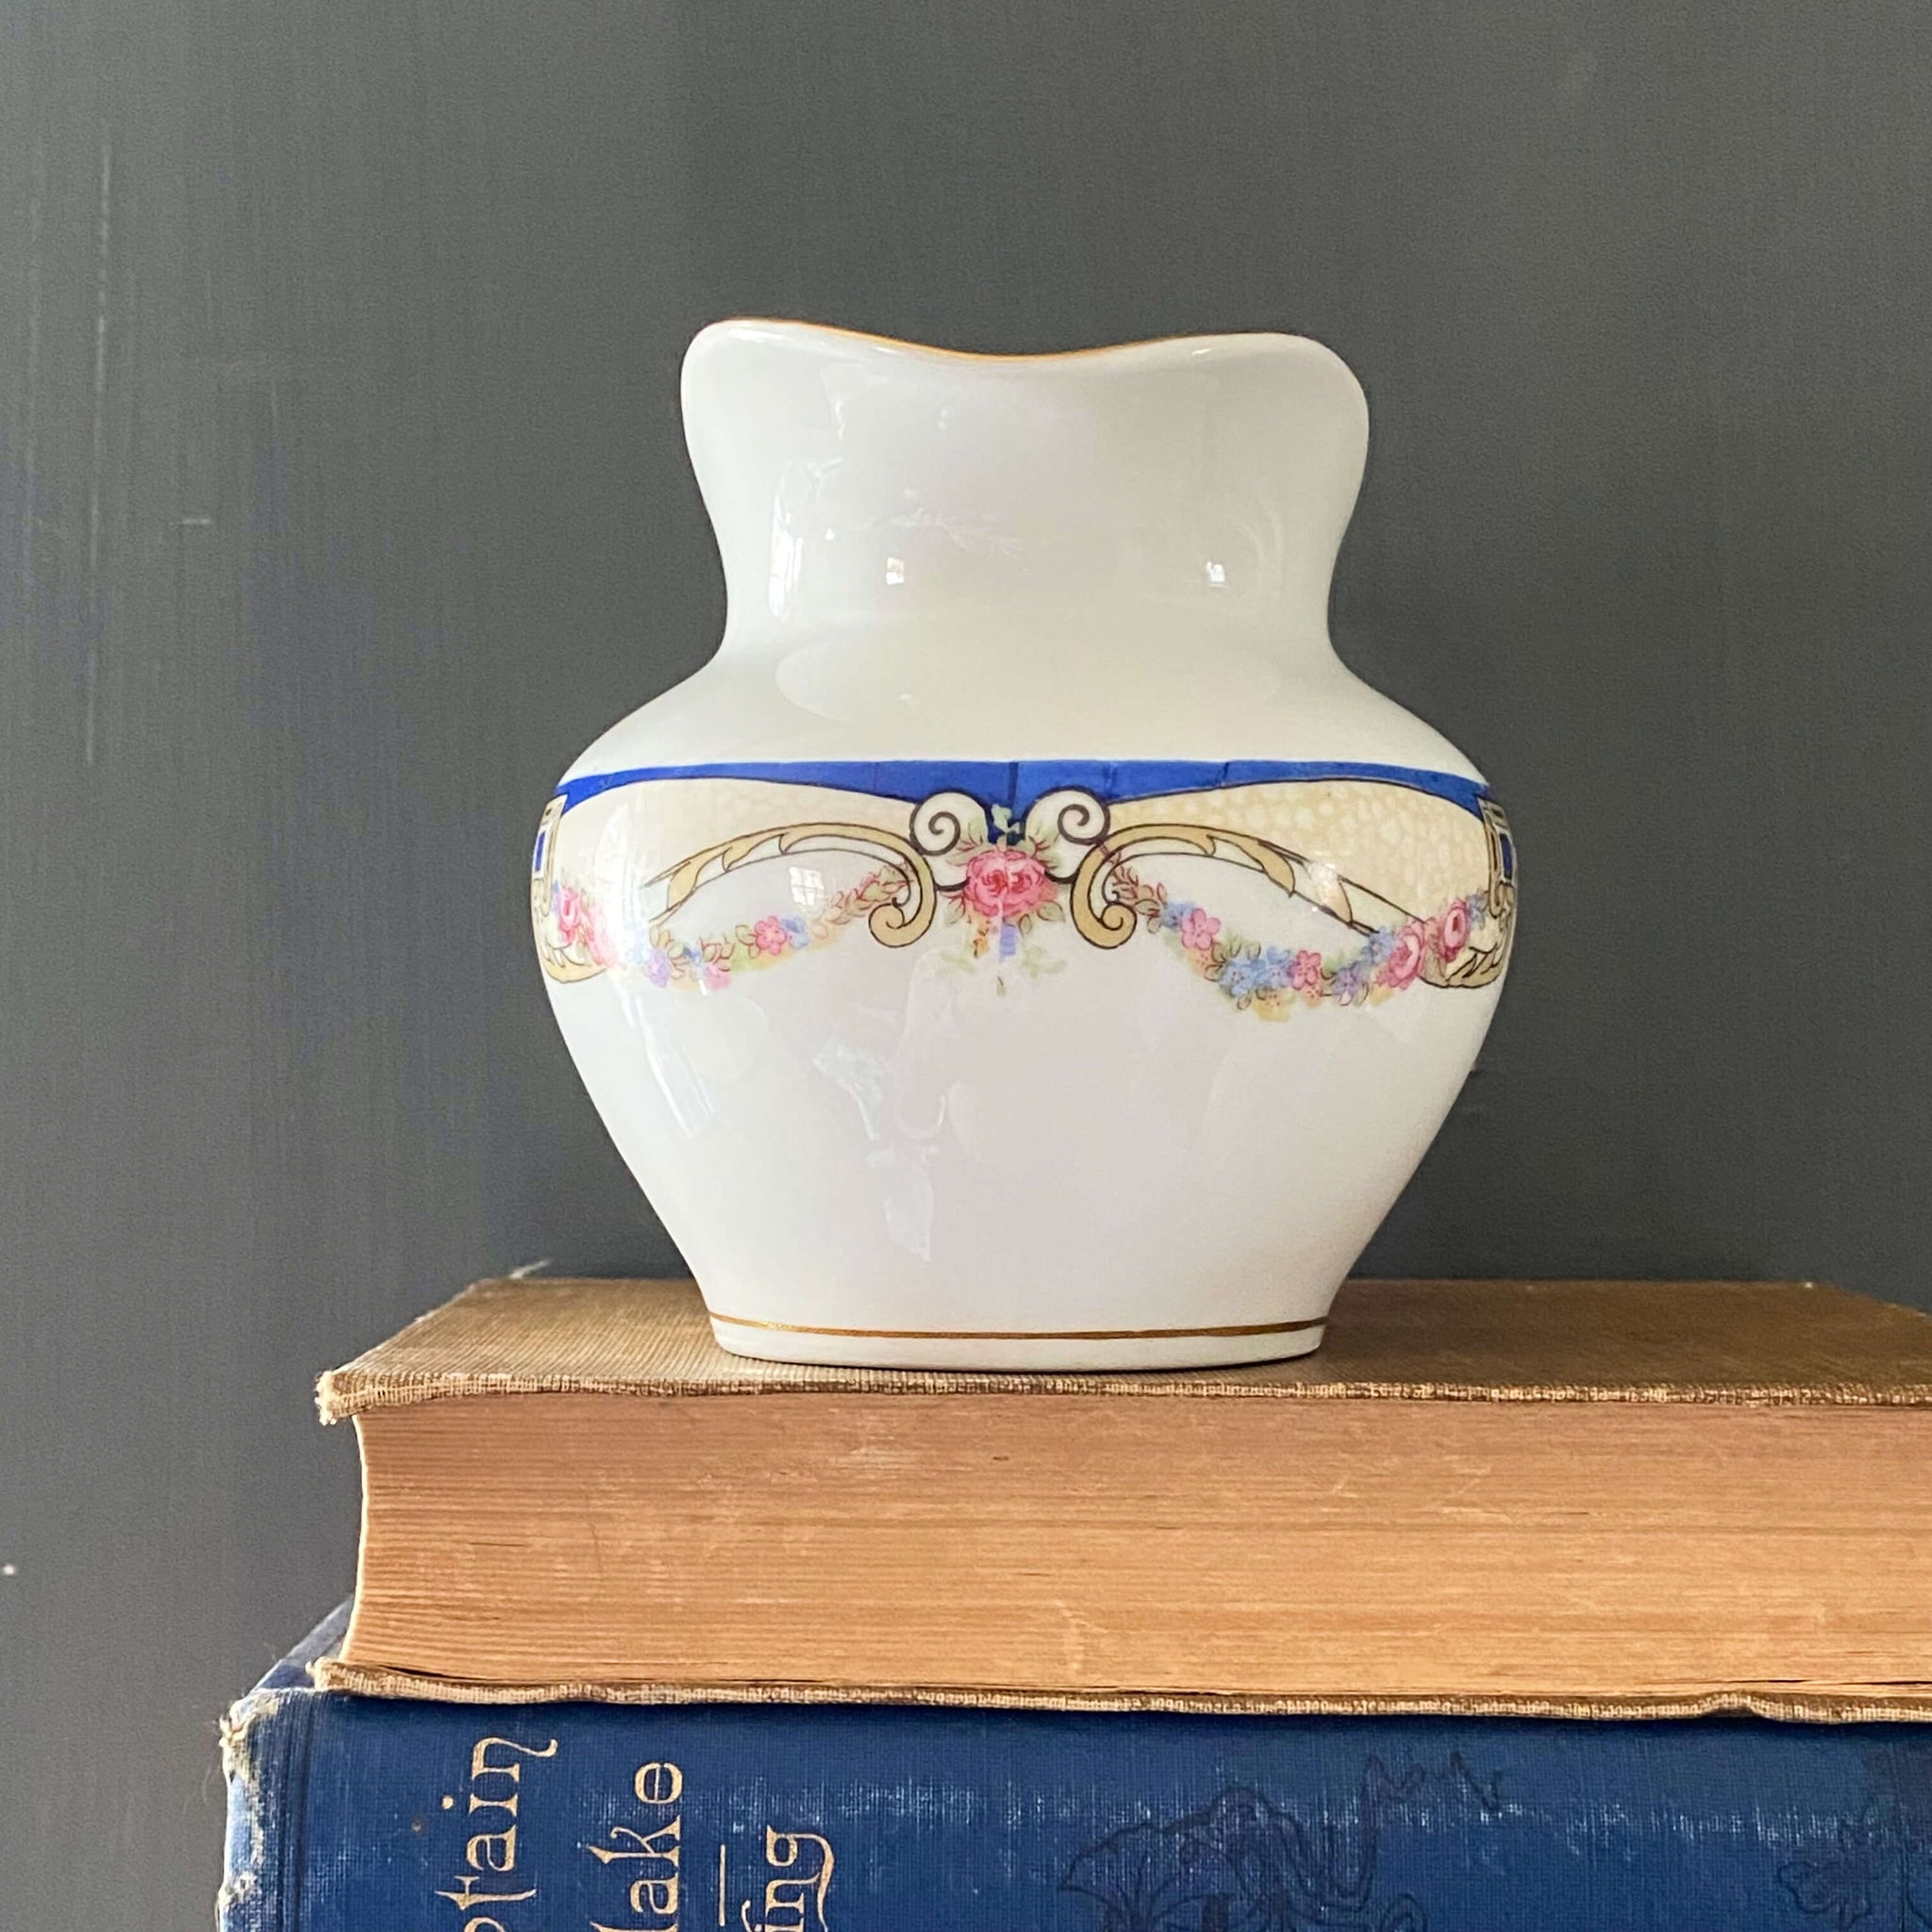 Vintage 1920s C.T. Altwasser Silesia Creamer - Blue and Pink Floral Porcelain Creamer circa 1925-1932